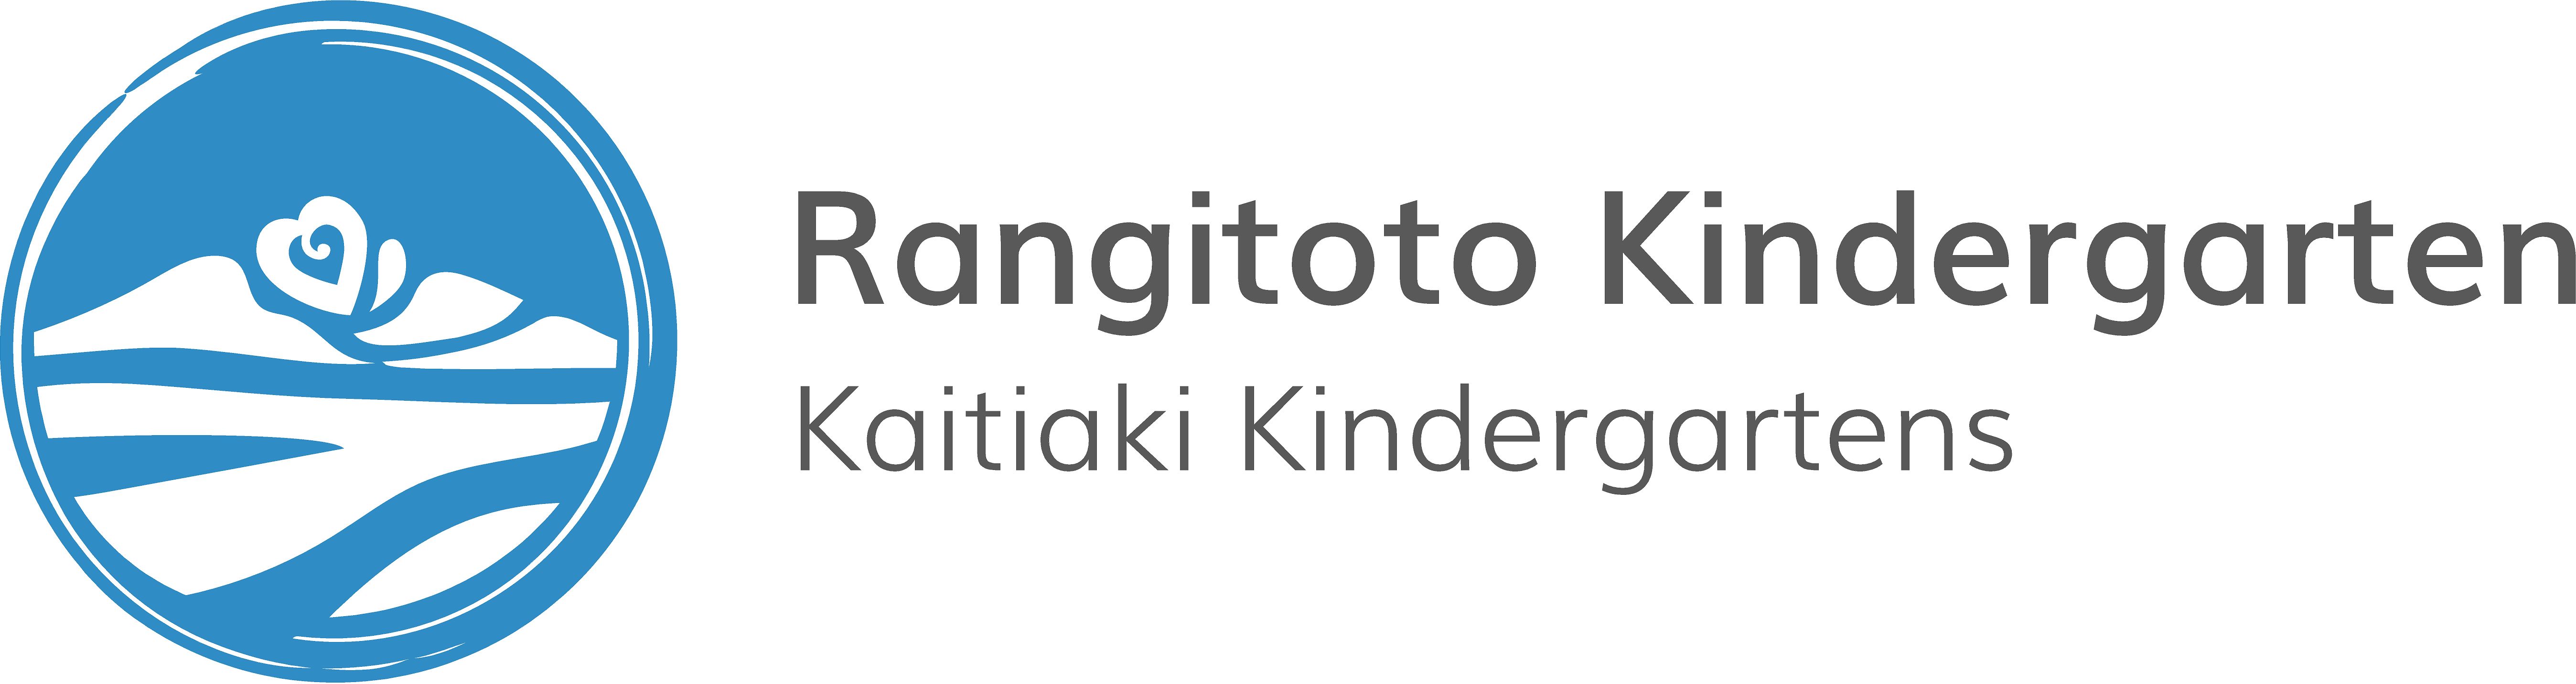 Rangitoto Kindergarten FTE Teacher – Fixed Term Maternity Cover, Full Time